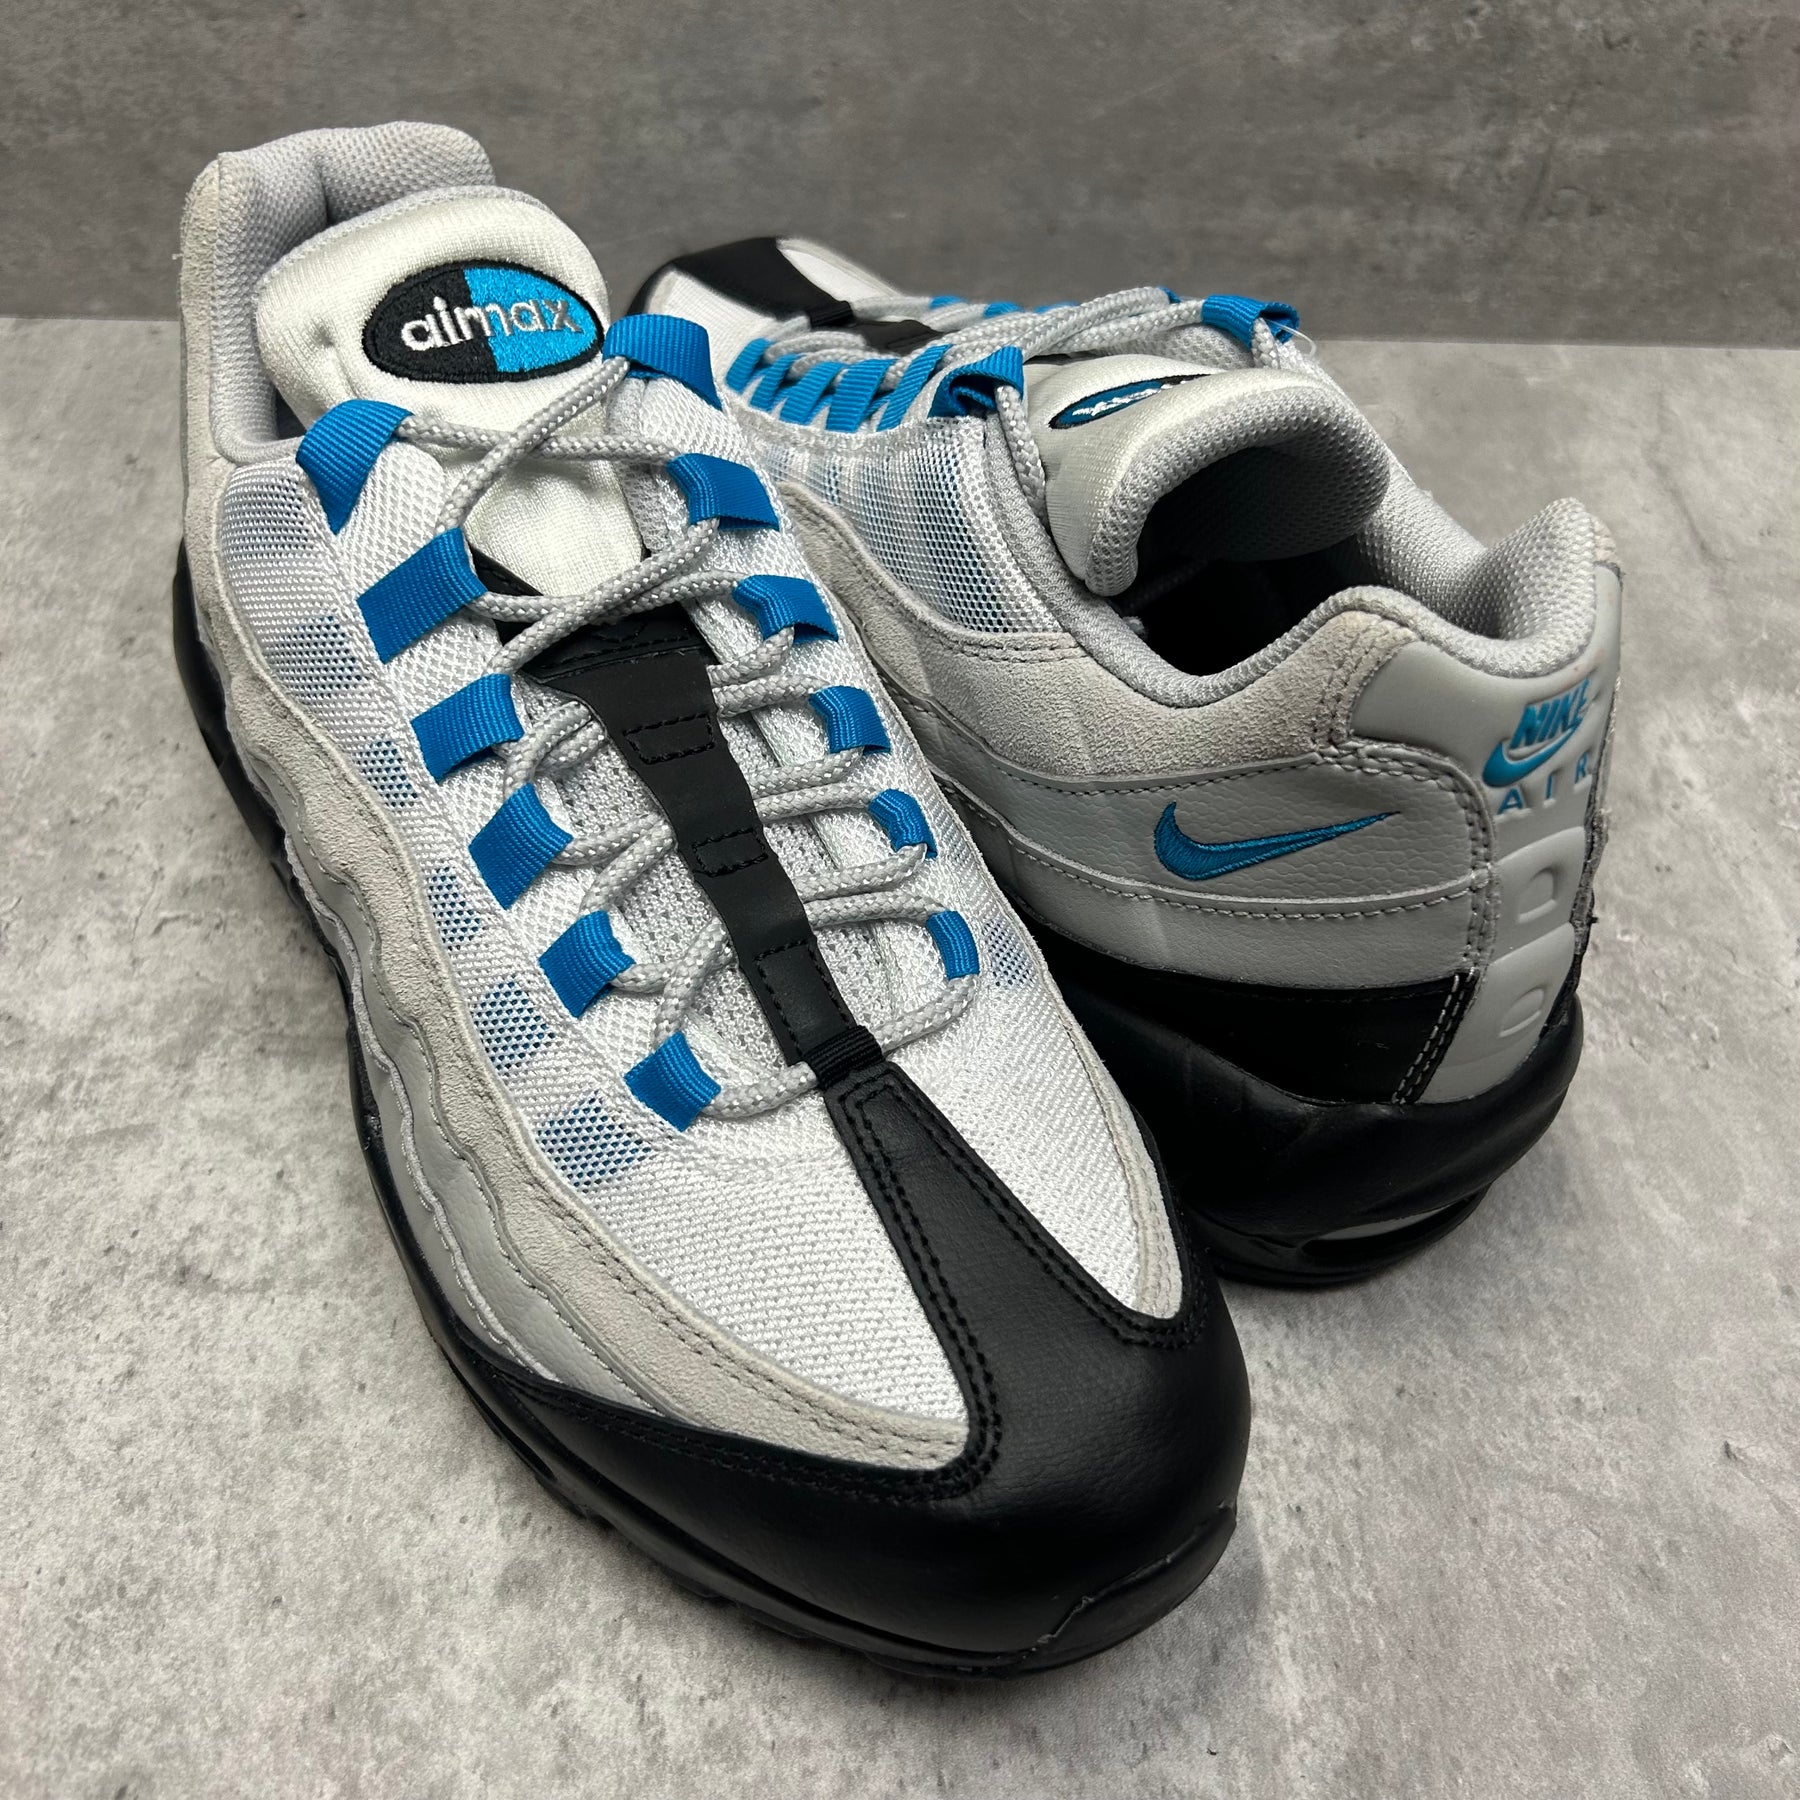 Nike Airmax 95 Laser Blue